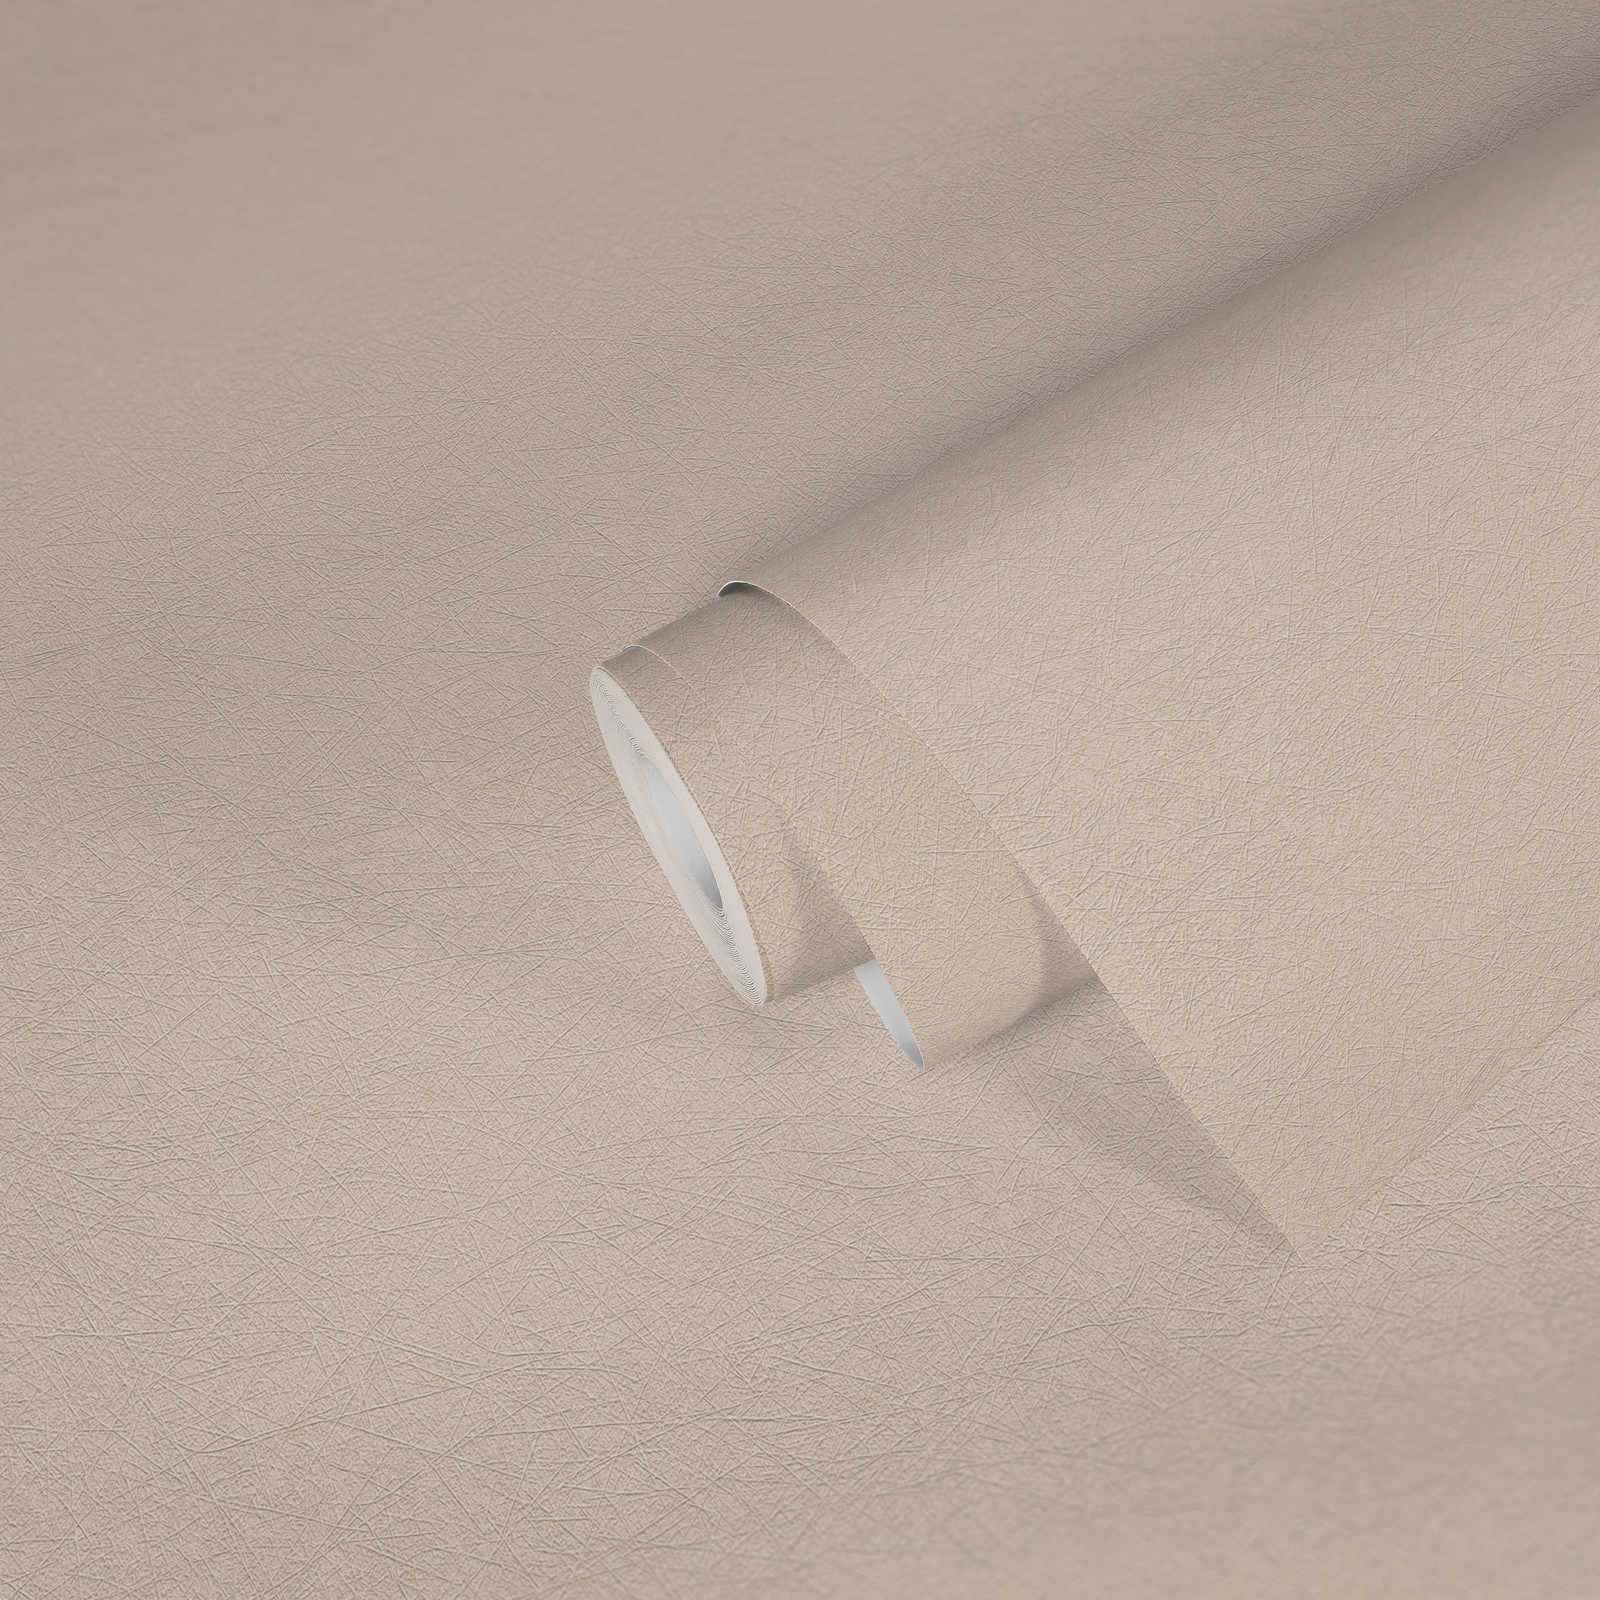             papel pintado texturizado liso en yeso efecto brillo texturizado - rosa
        